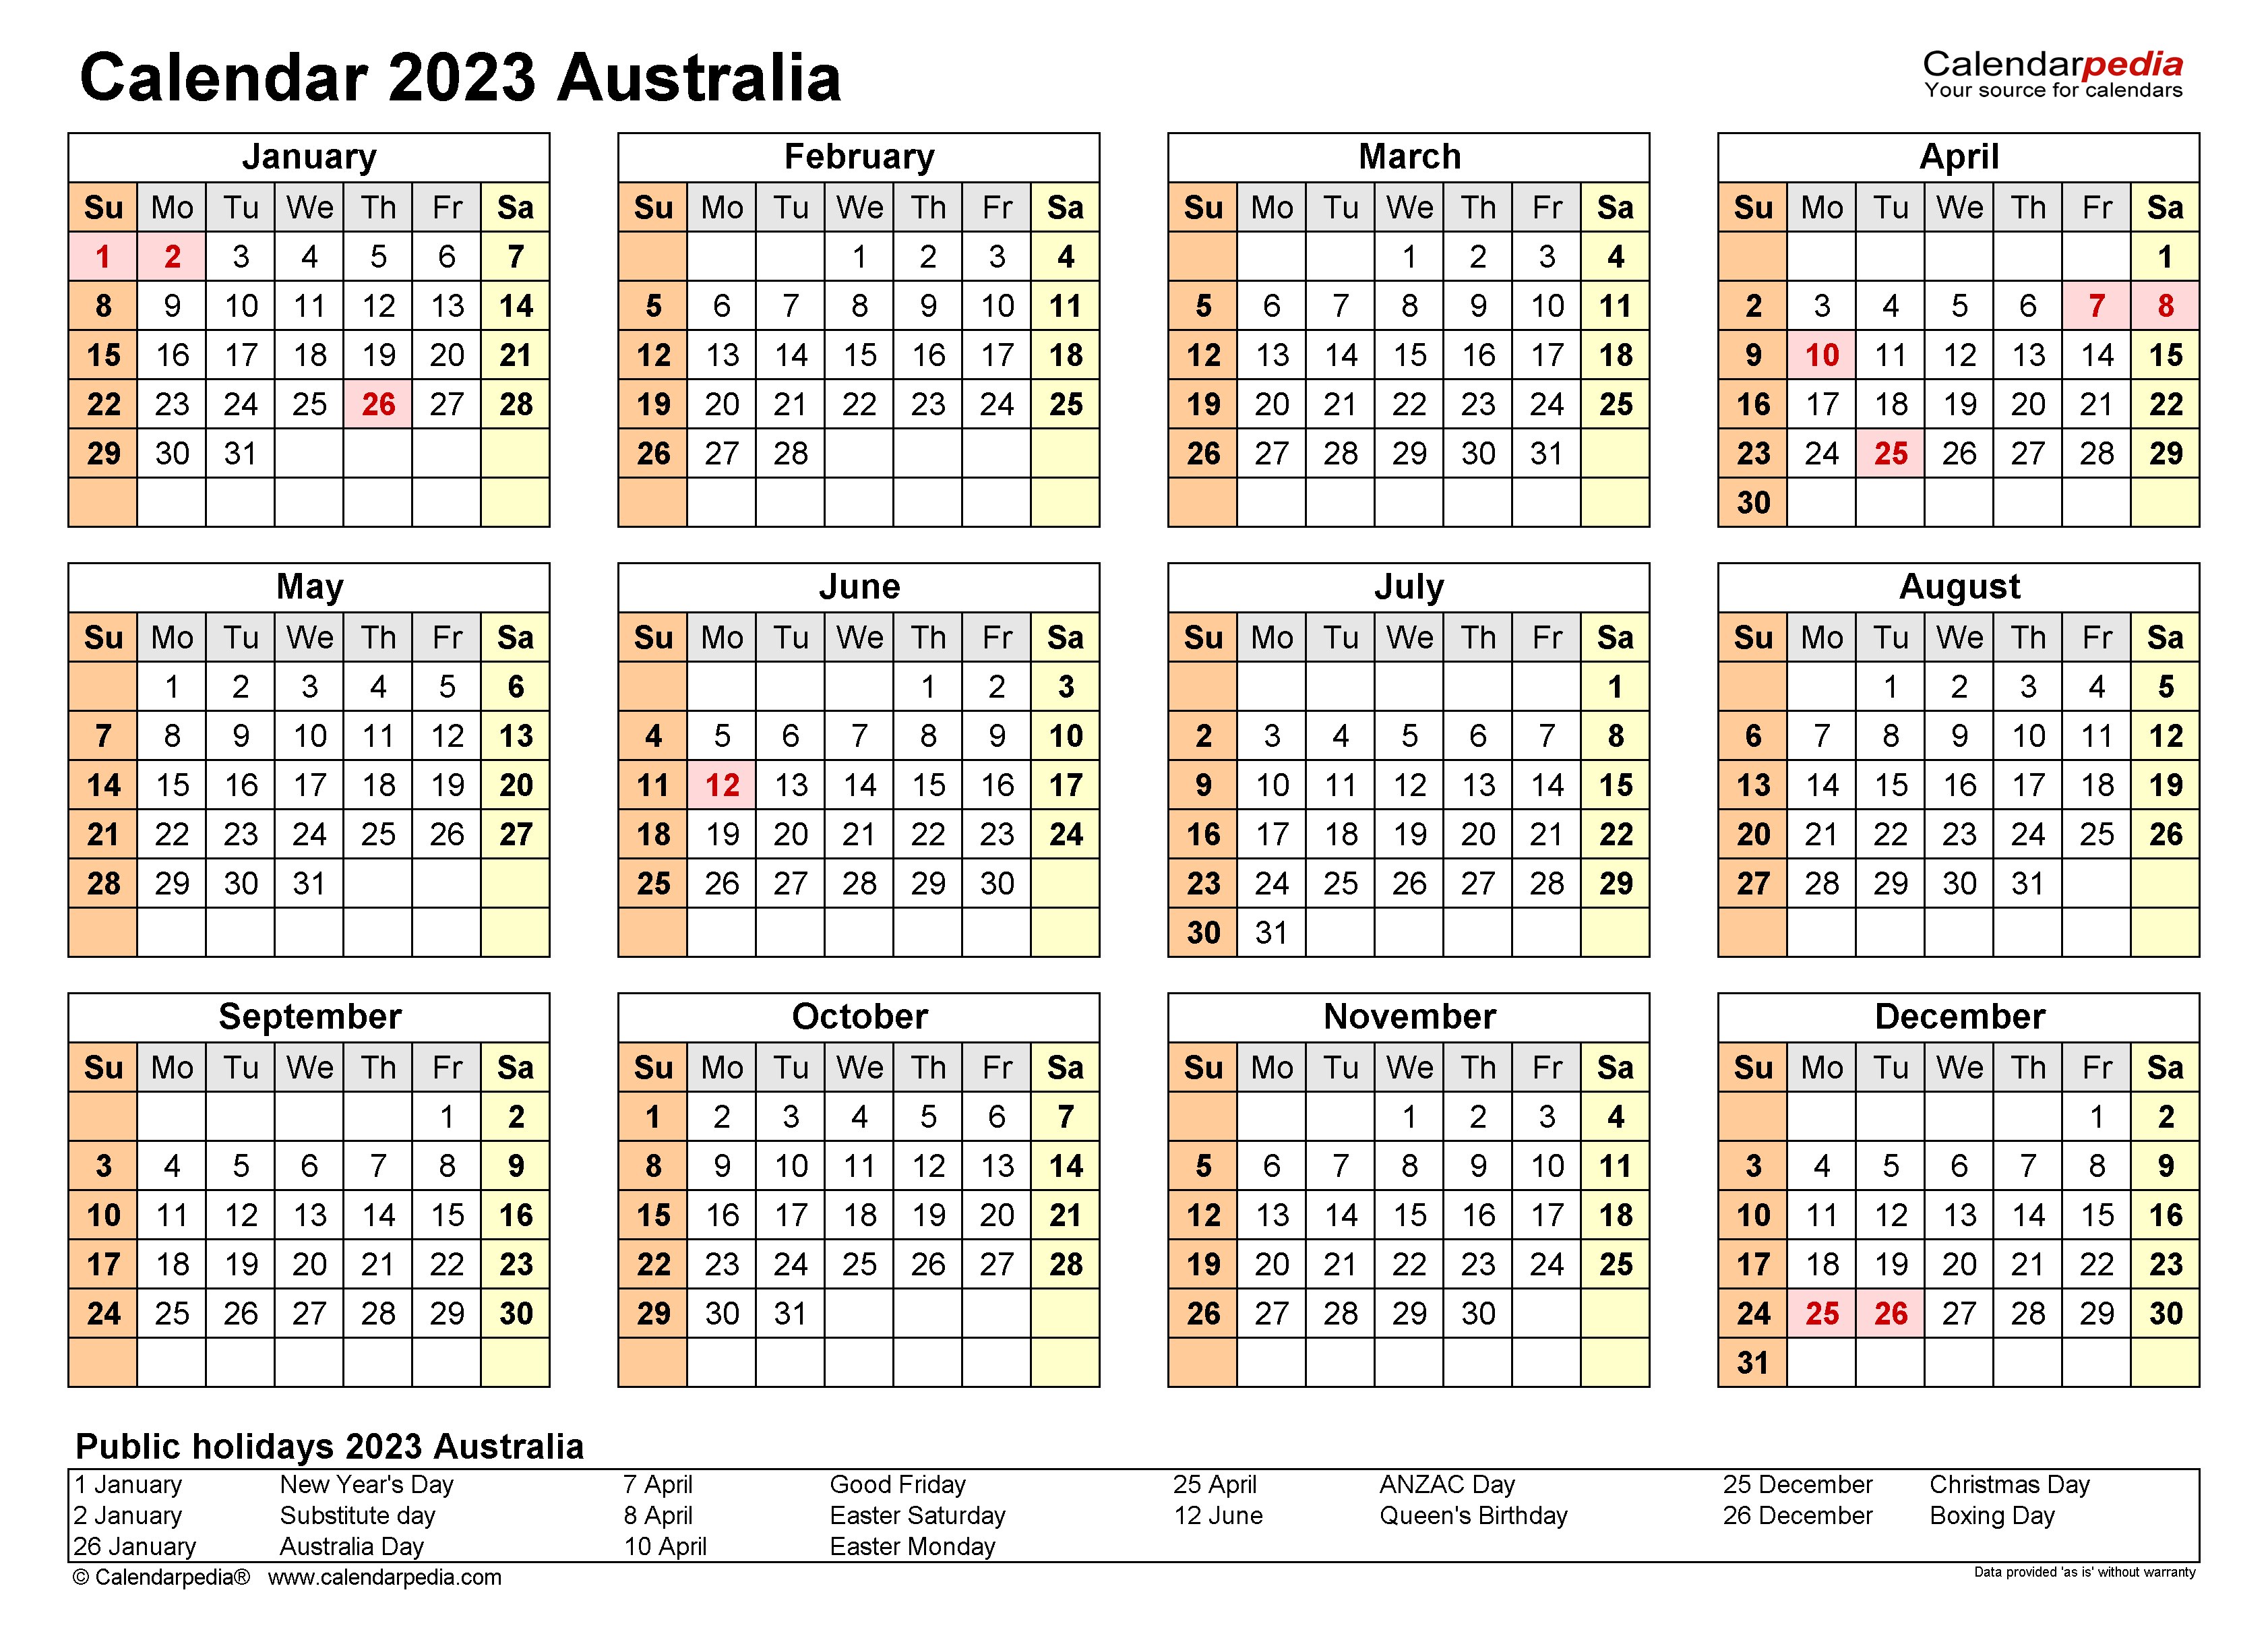 calendar-2023-australia-calendarpedia-free-printable-online